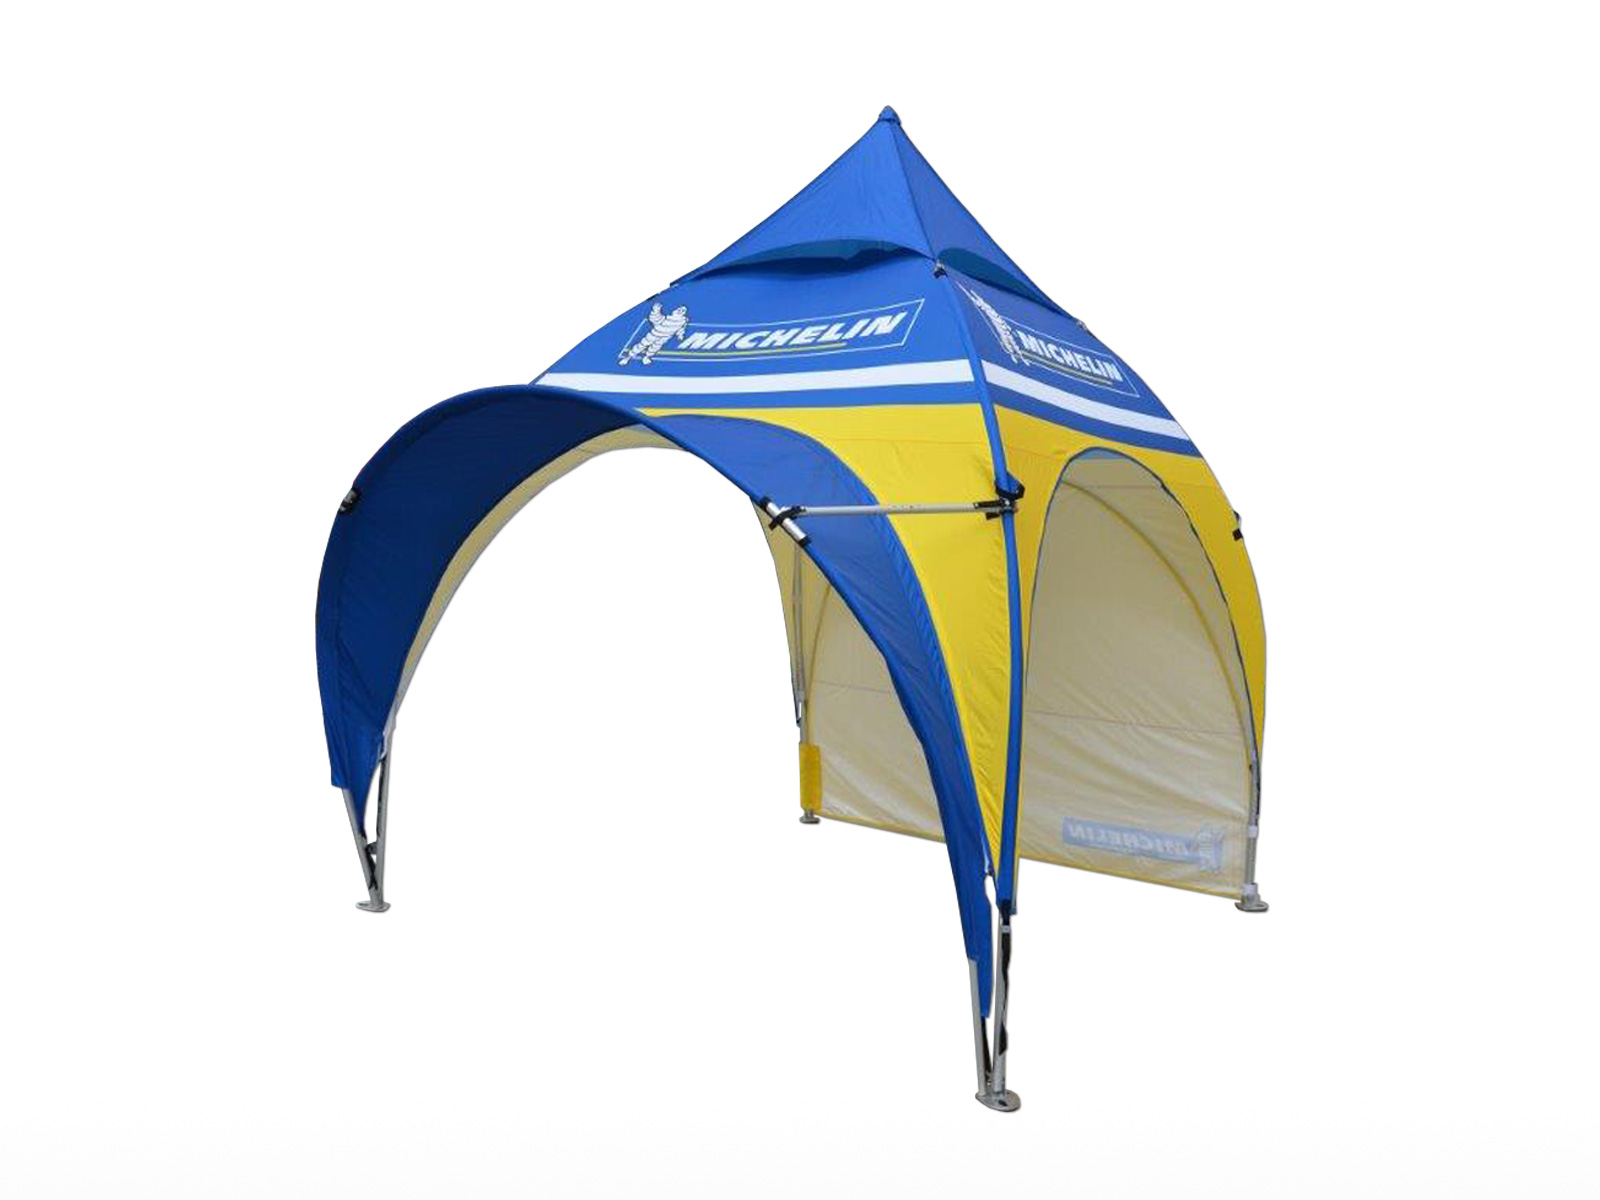 A folding tent called Expodôme with a very original shape